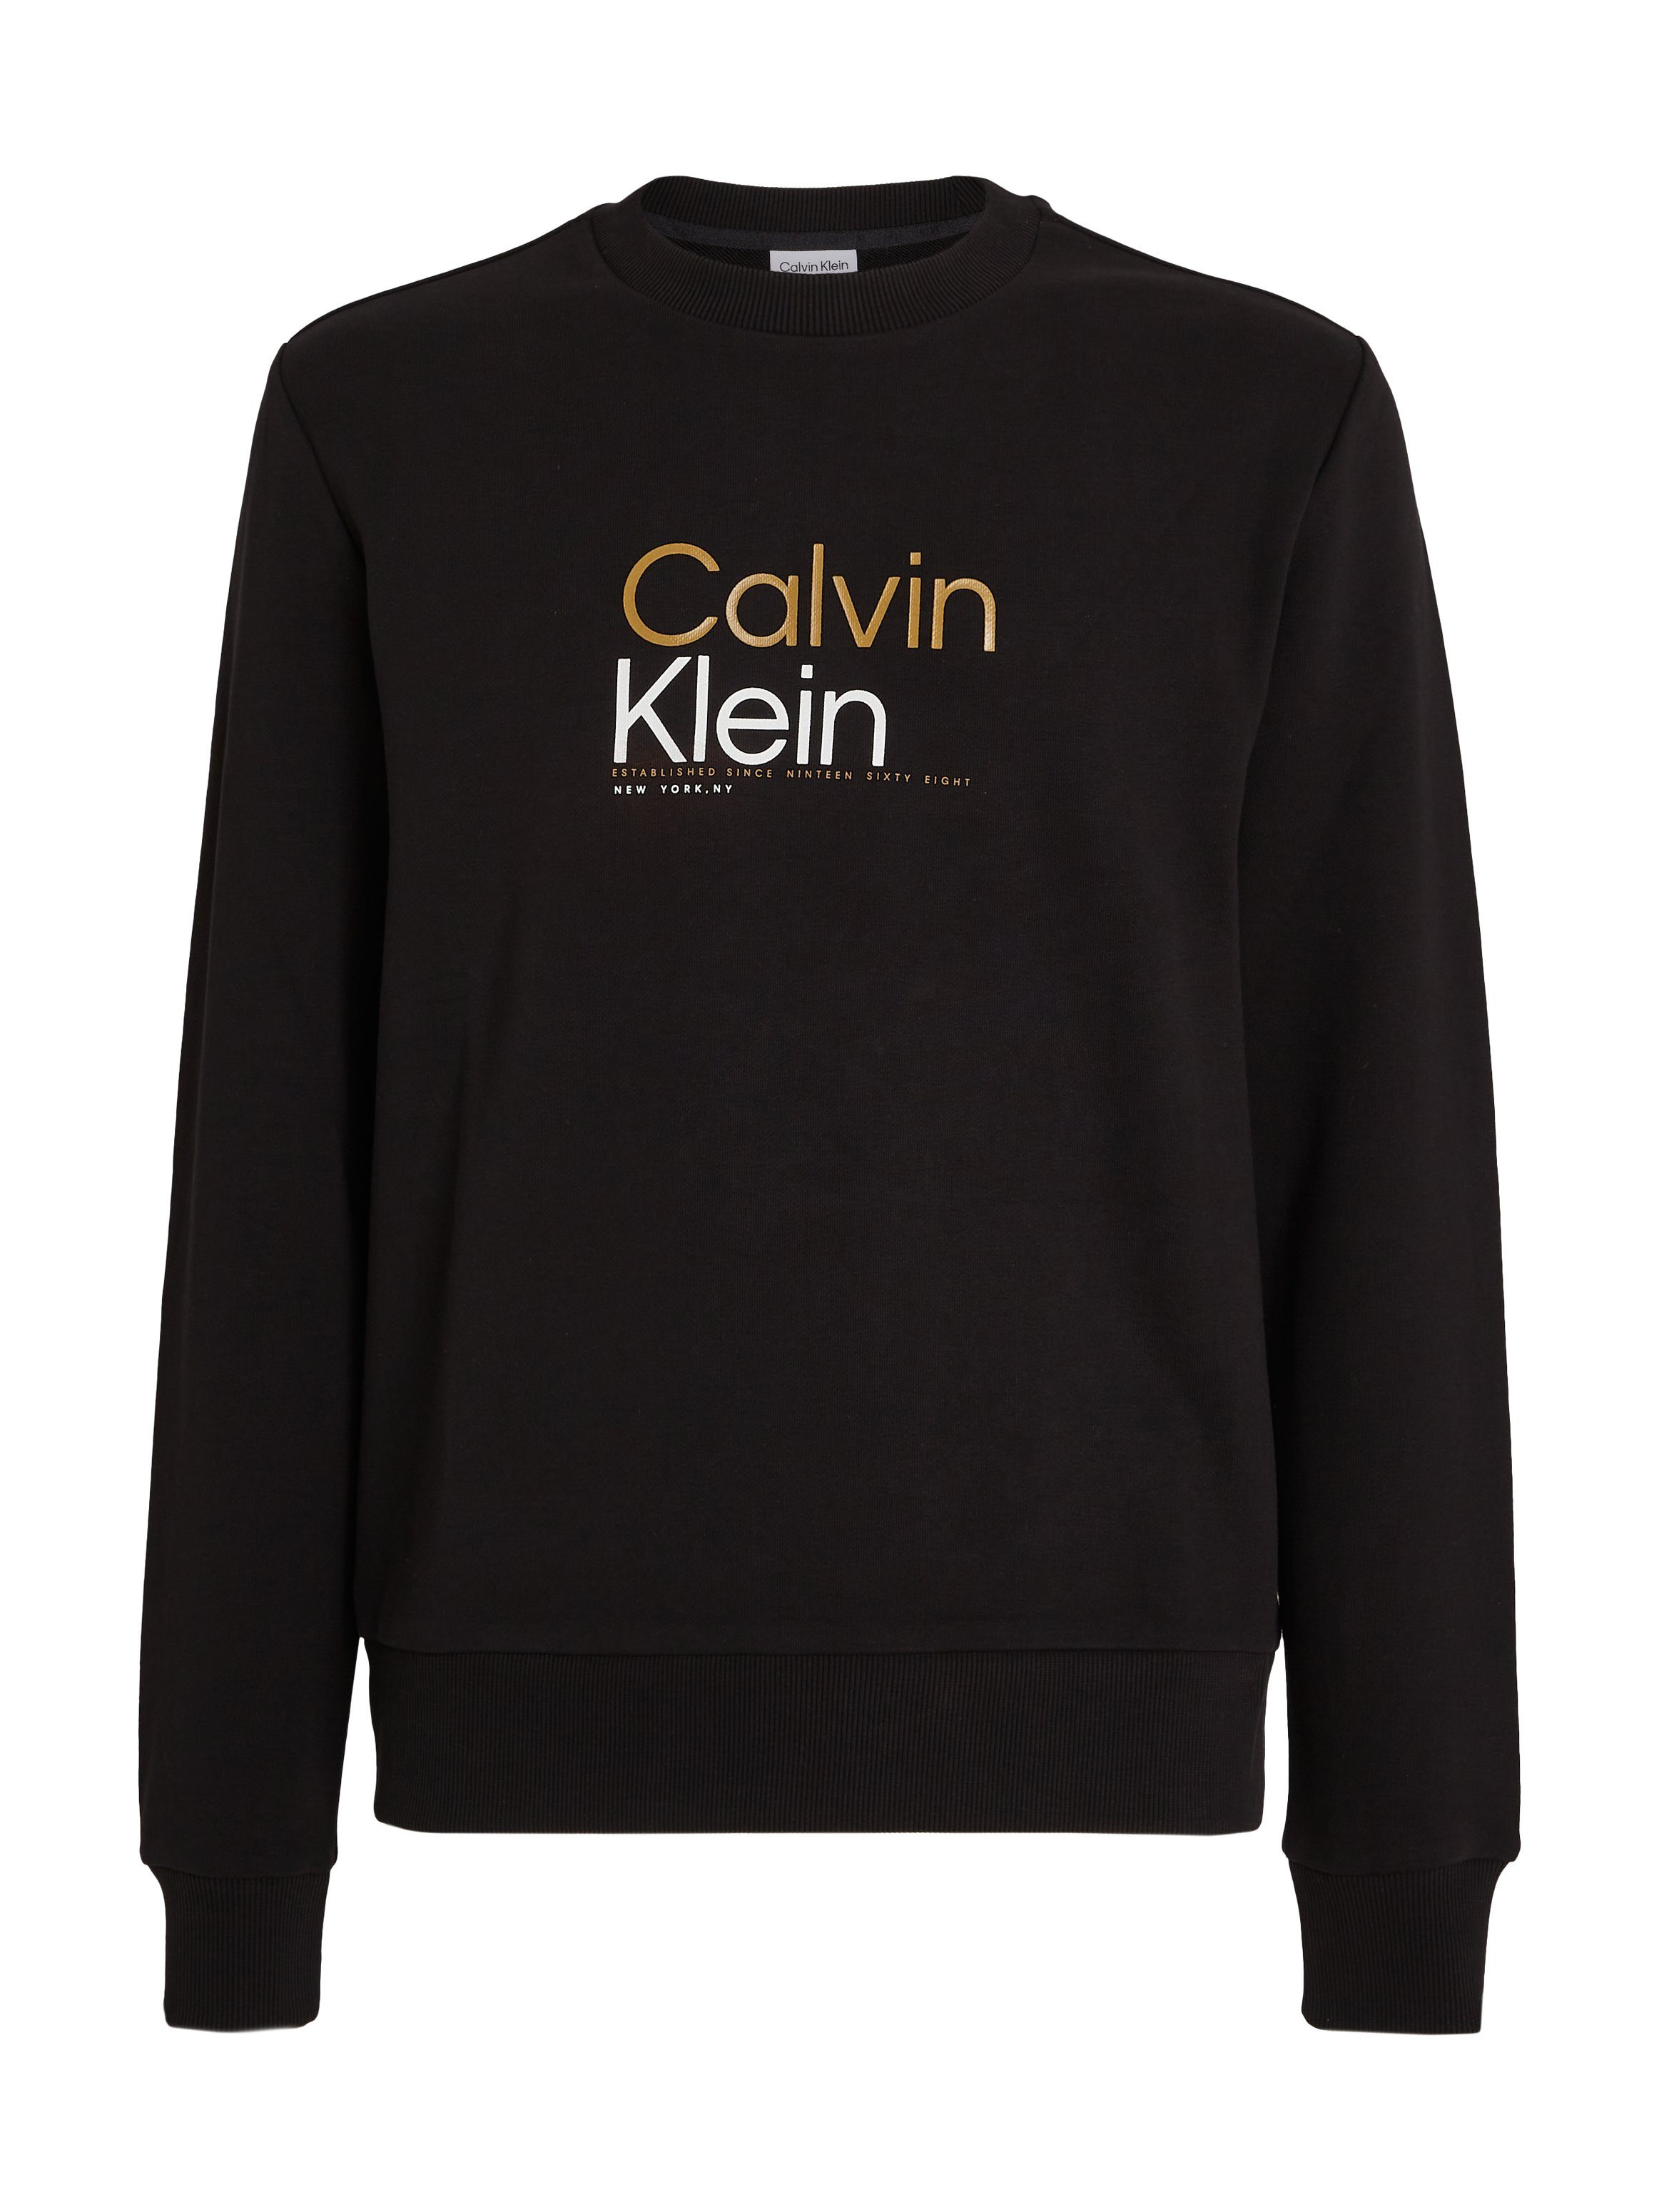 Markenlabel COLOR LOGO mit Klein Sweatshirt SWEATSHIRT Black MULTI Ck Calvin